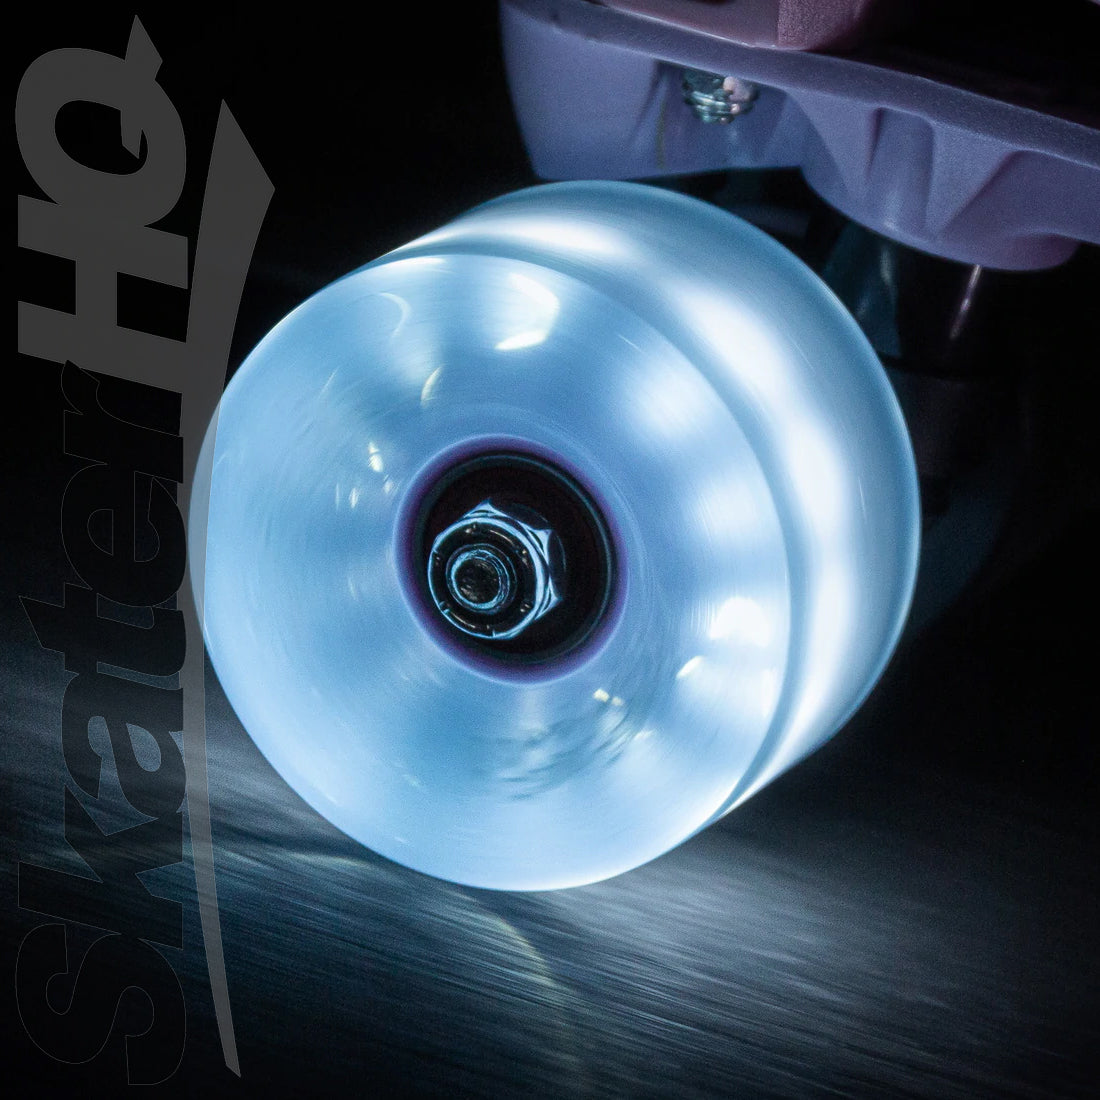 Chaya Neons LED 65mm 78a 4pk - Neon Blue Roller Skate Wheels